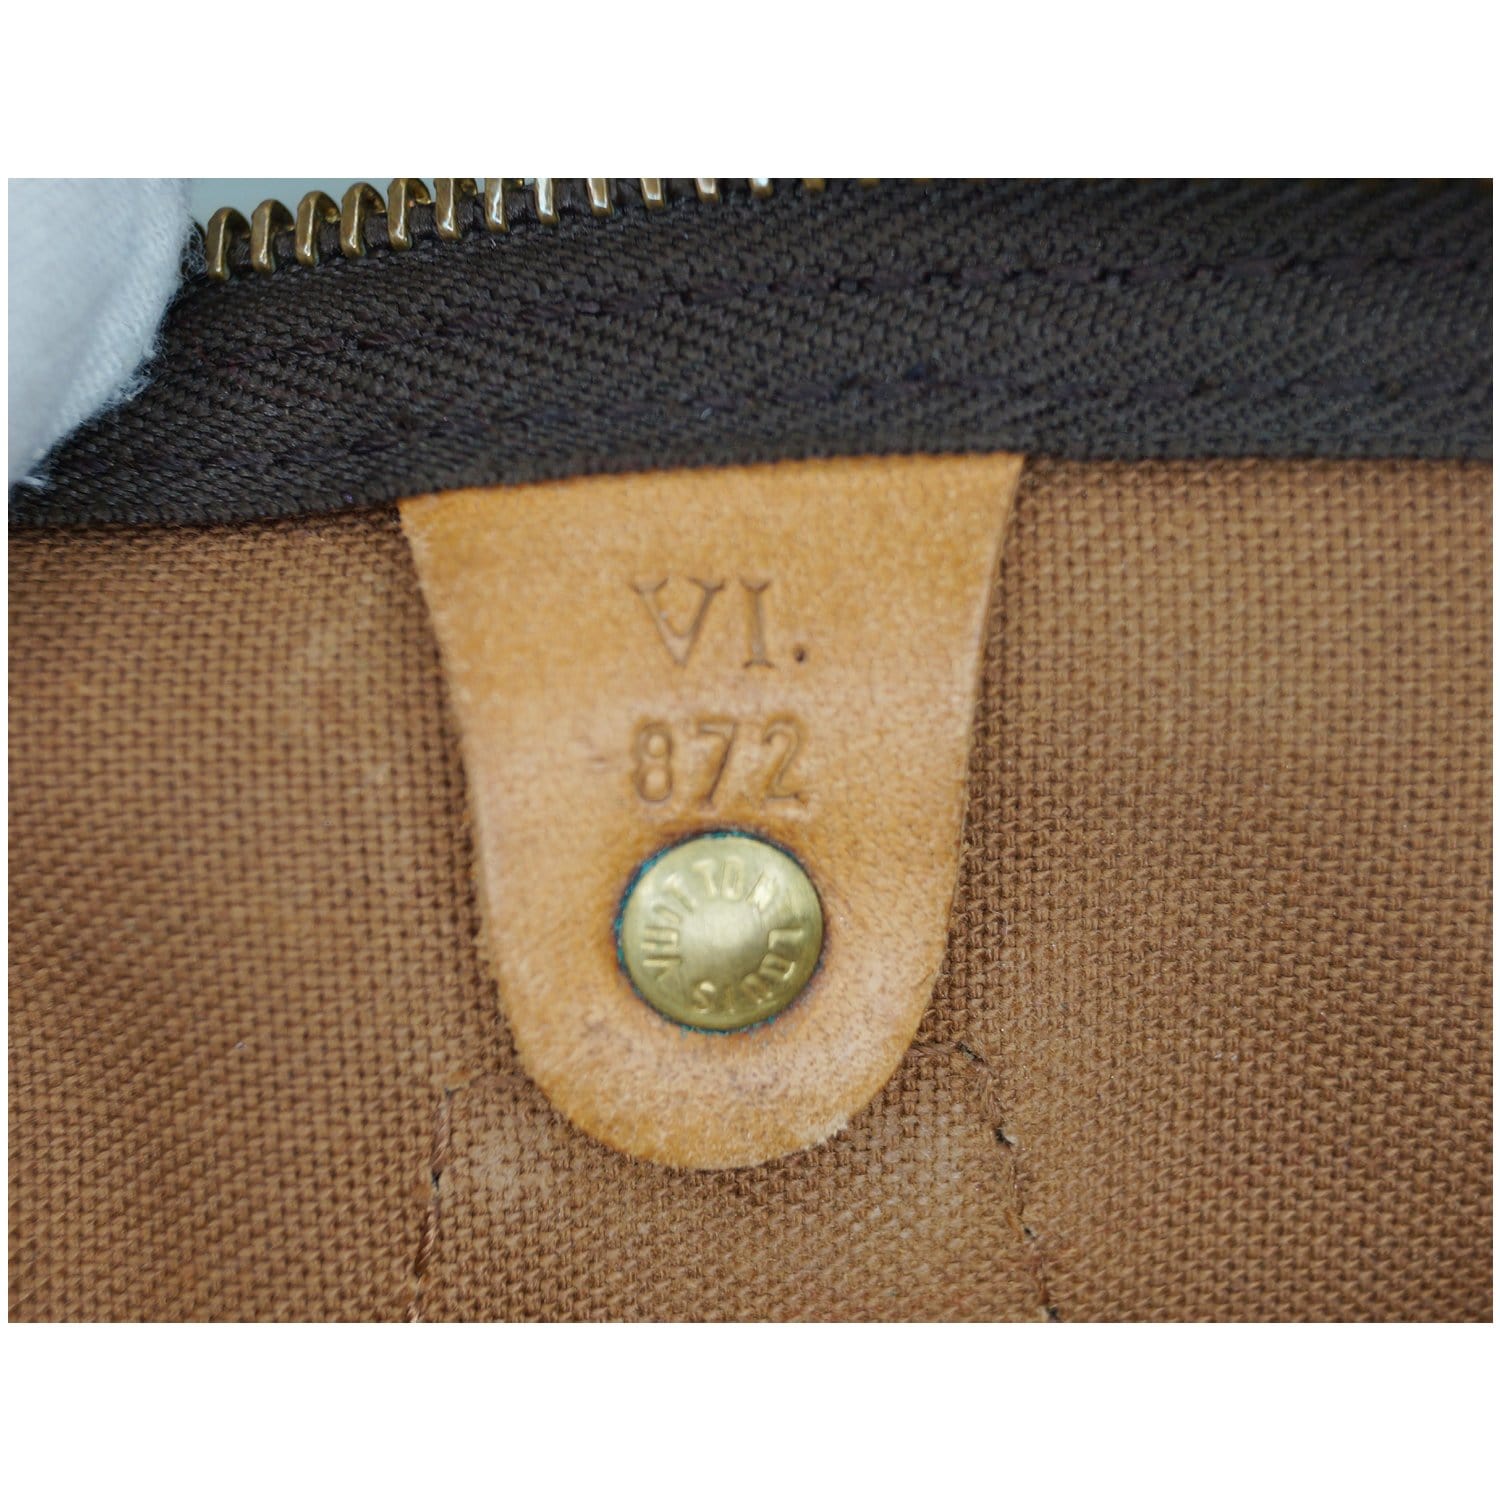 LOUIS Vuitton Brown Faux Leather LV Logo Speedy 35 Doctor Handbag Purse